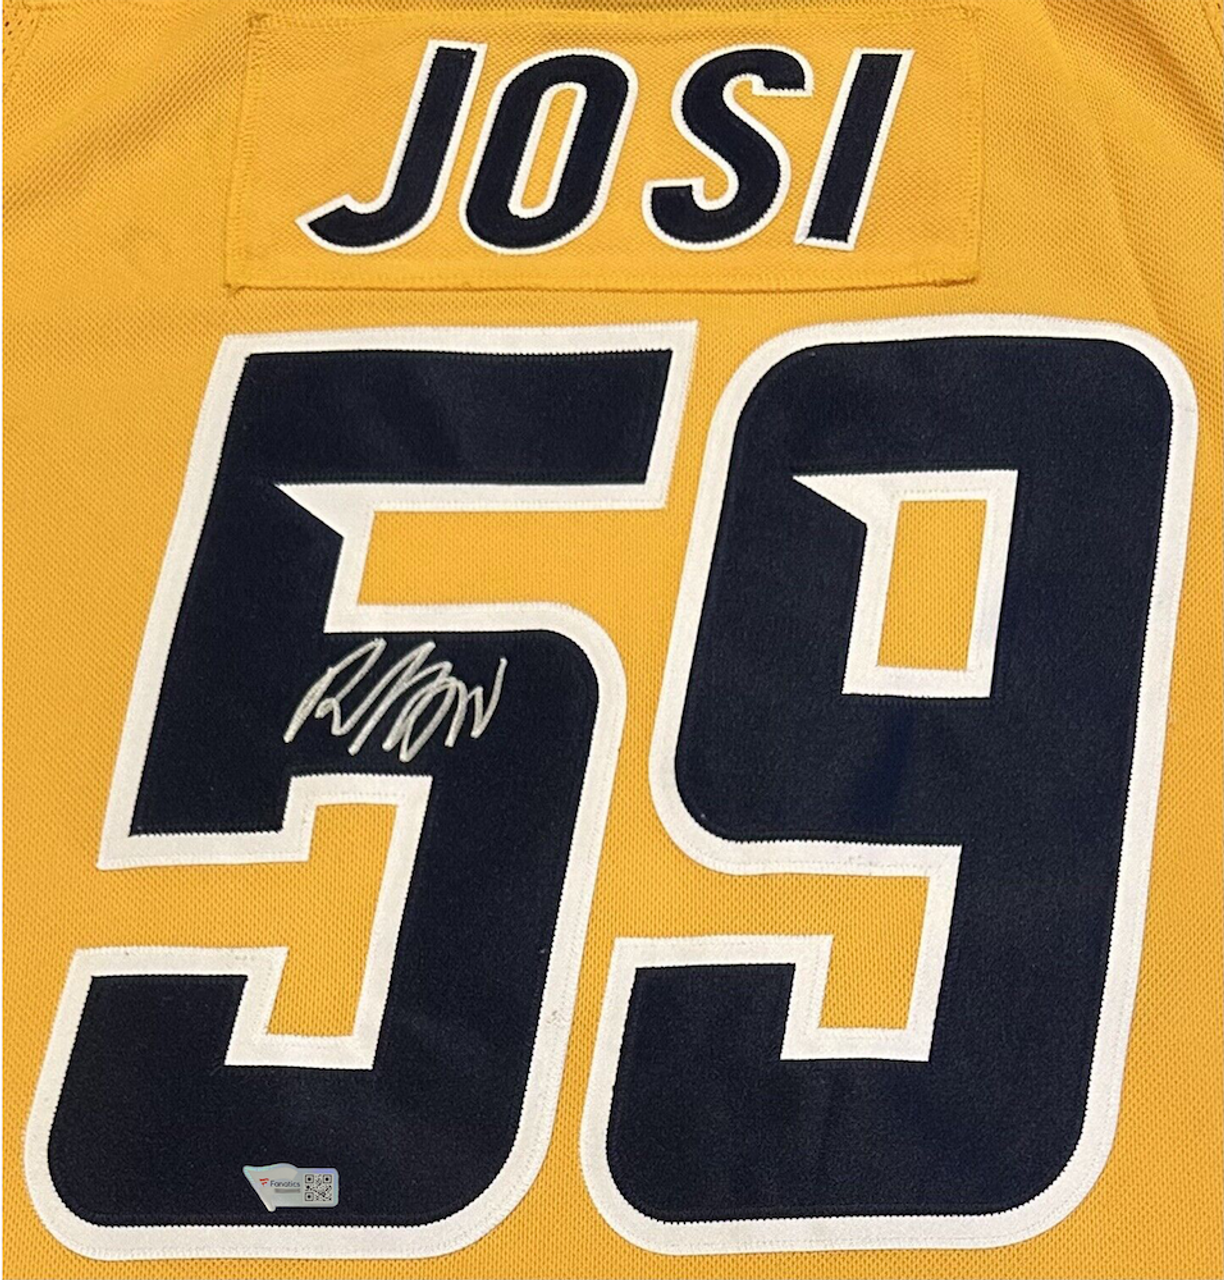 Roman Josi Nashville Predators Fanatics Authentic Autographed White Adidas  Authentic Jersey